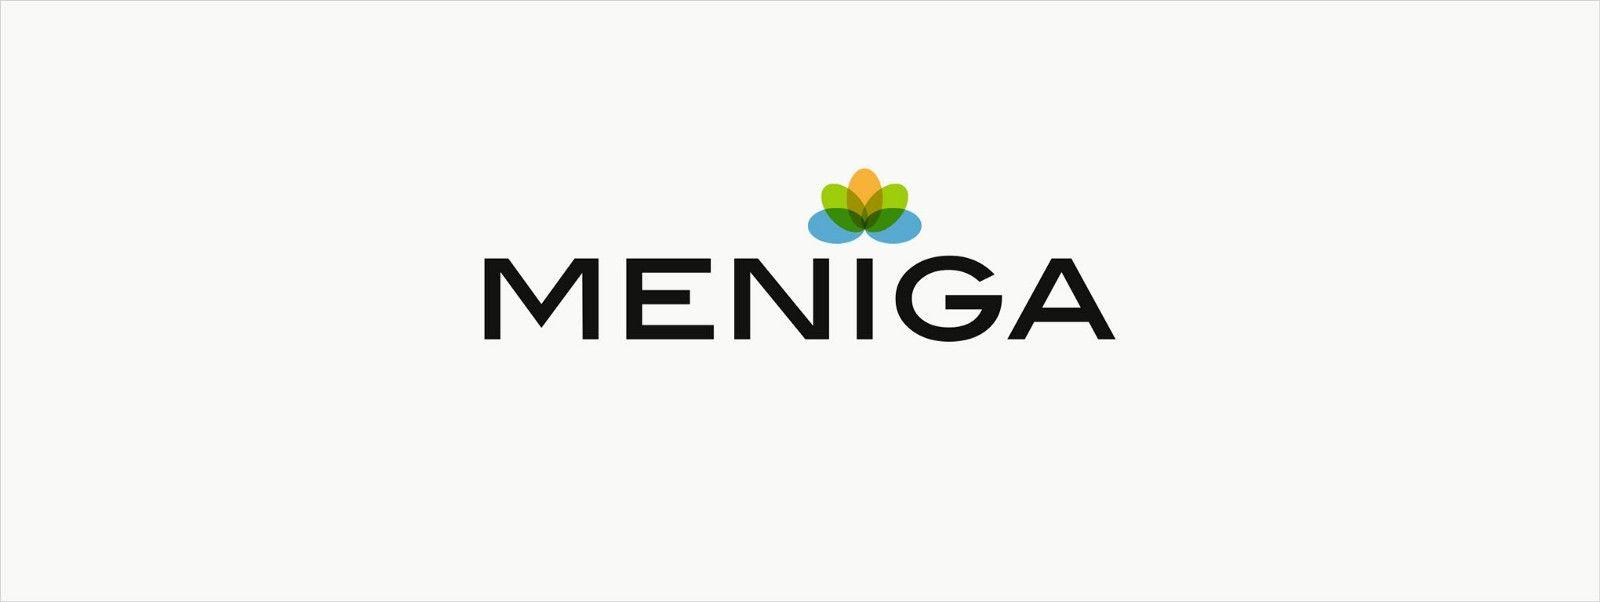 New Process Logo - A new Meniga: Our rebranding process